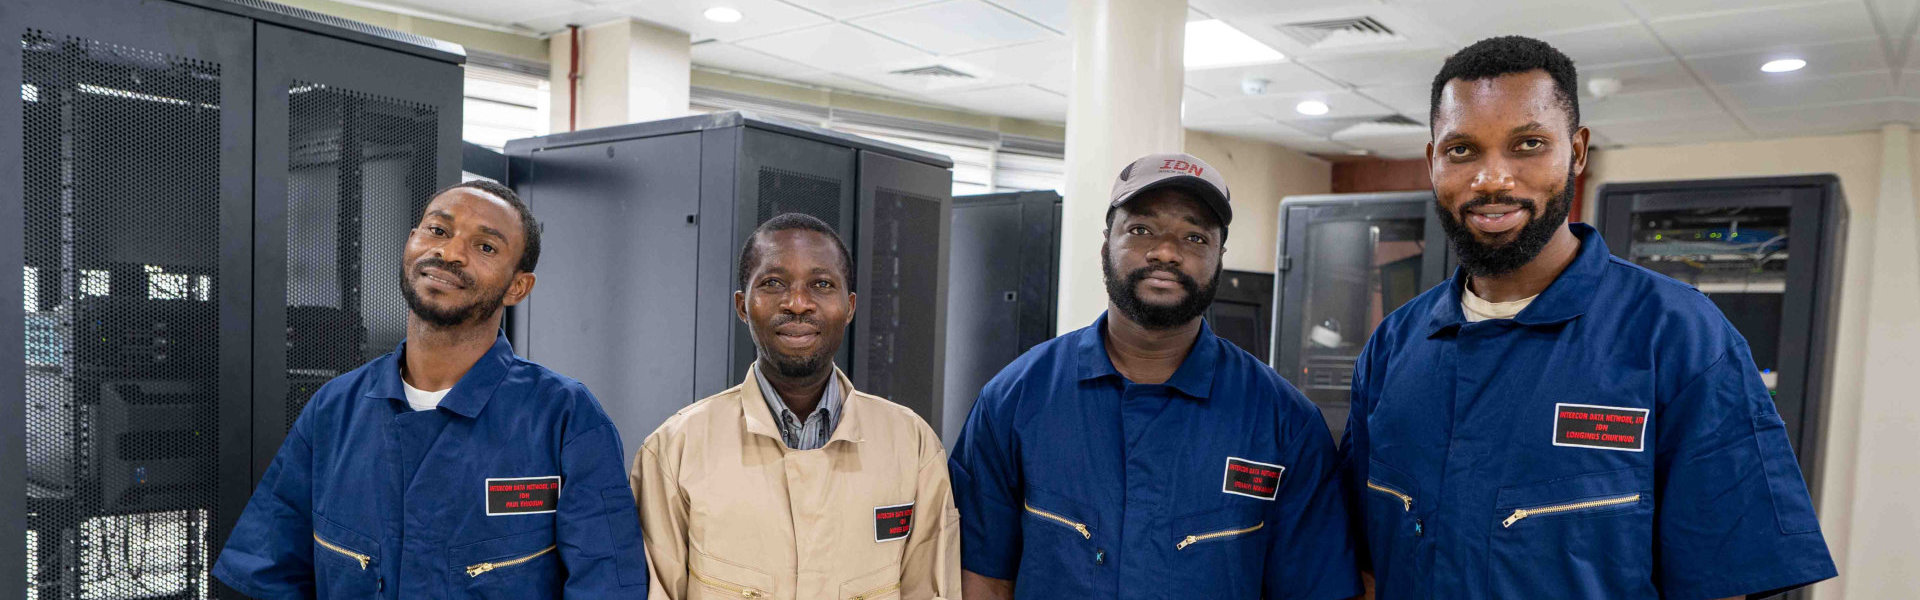 Smiling men standing in front of server